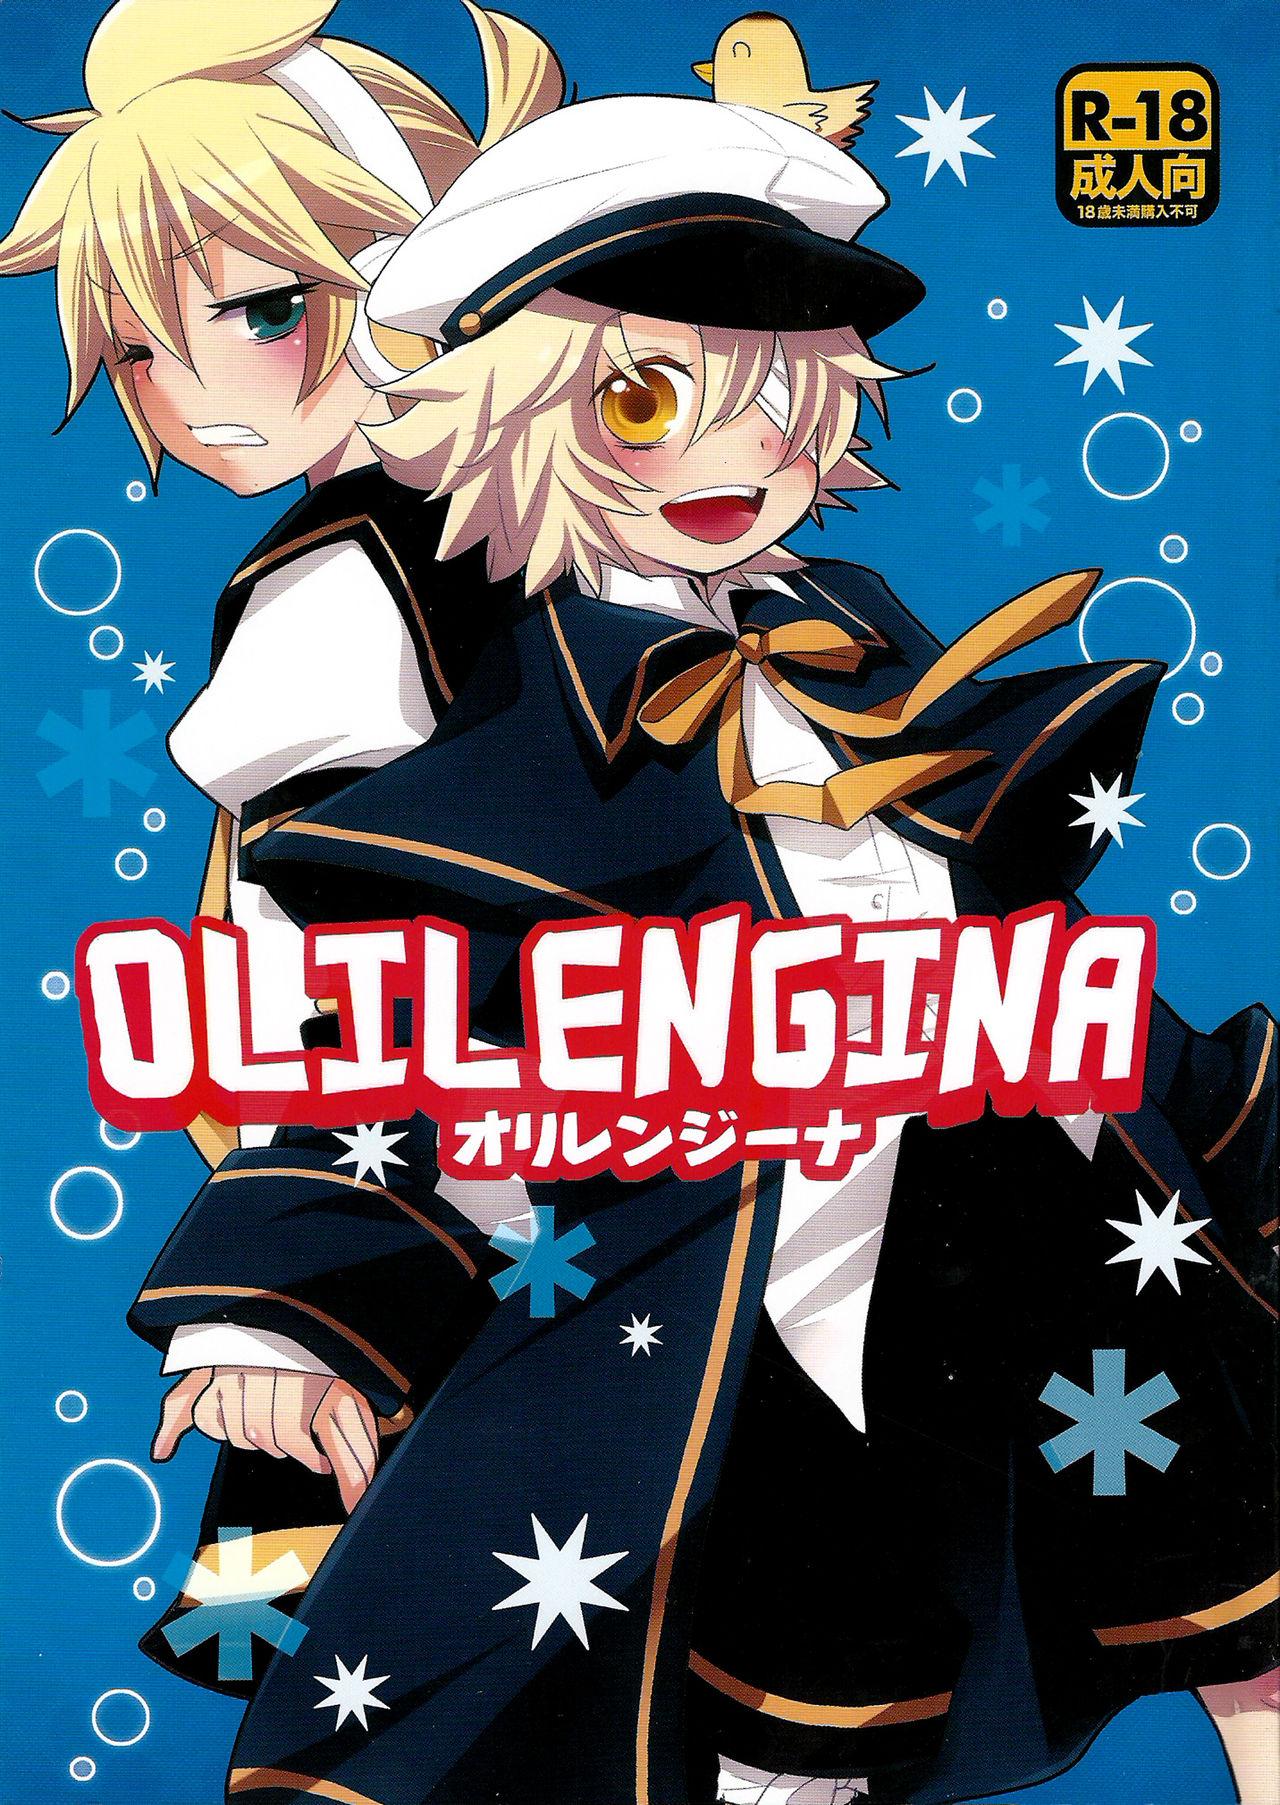 Teamskeet Olilengina - Vocaloid Com - Picture 1